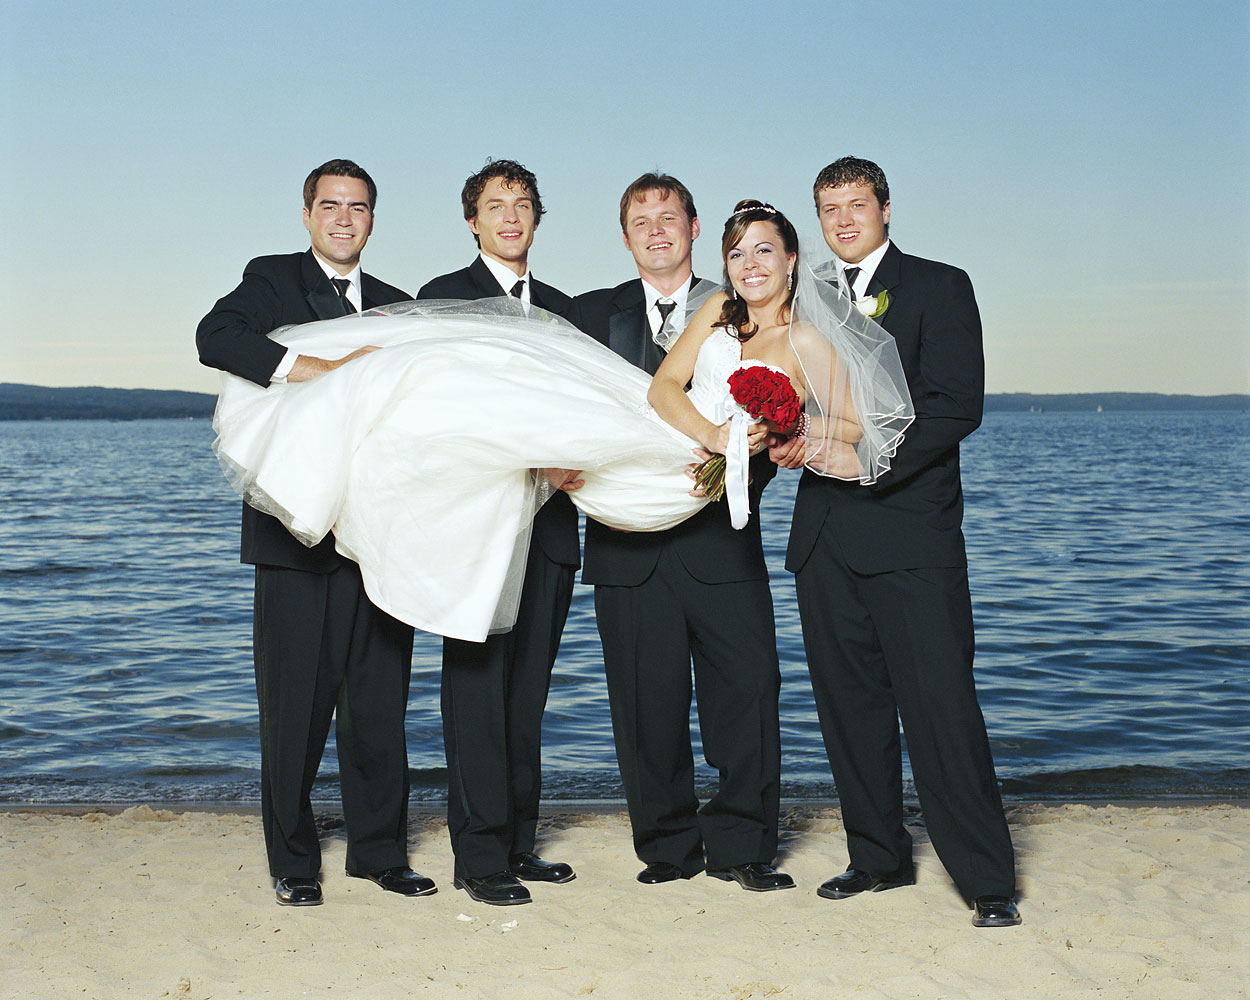 Groom and groomsmen holding bride on beach smiling, portrait